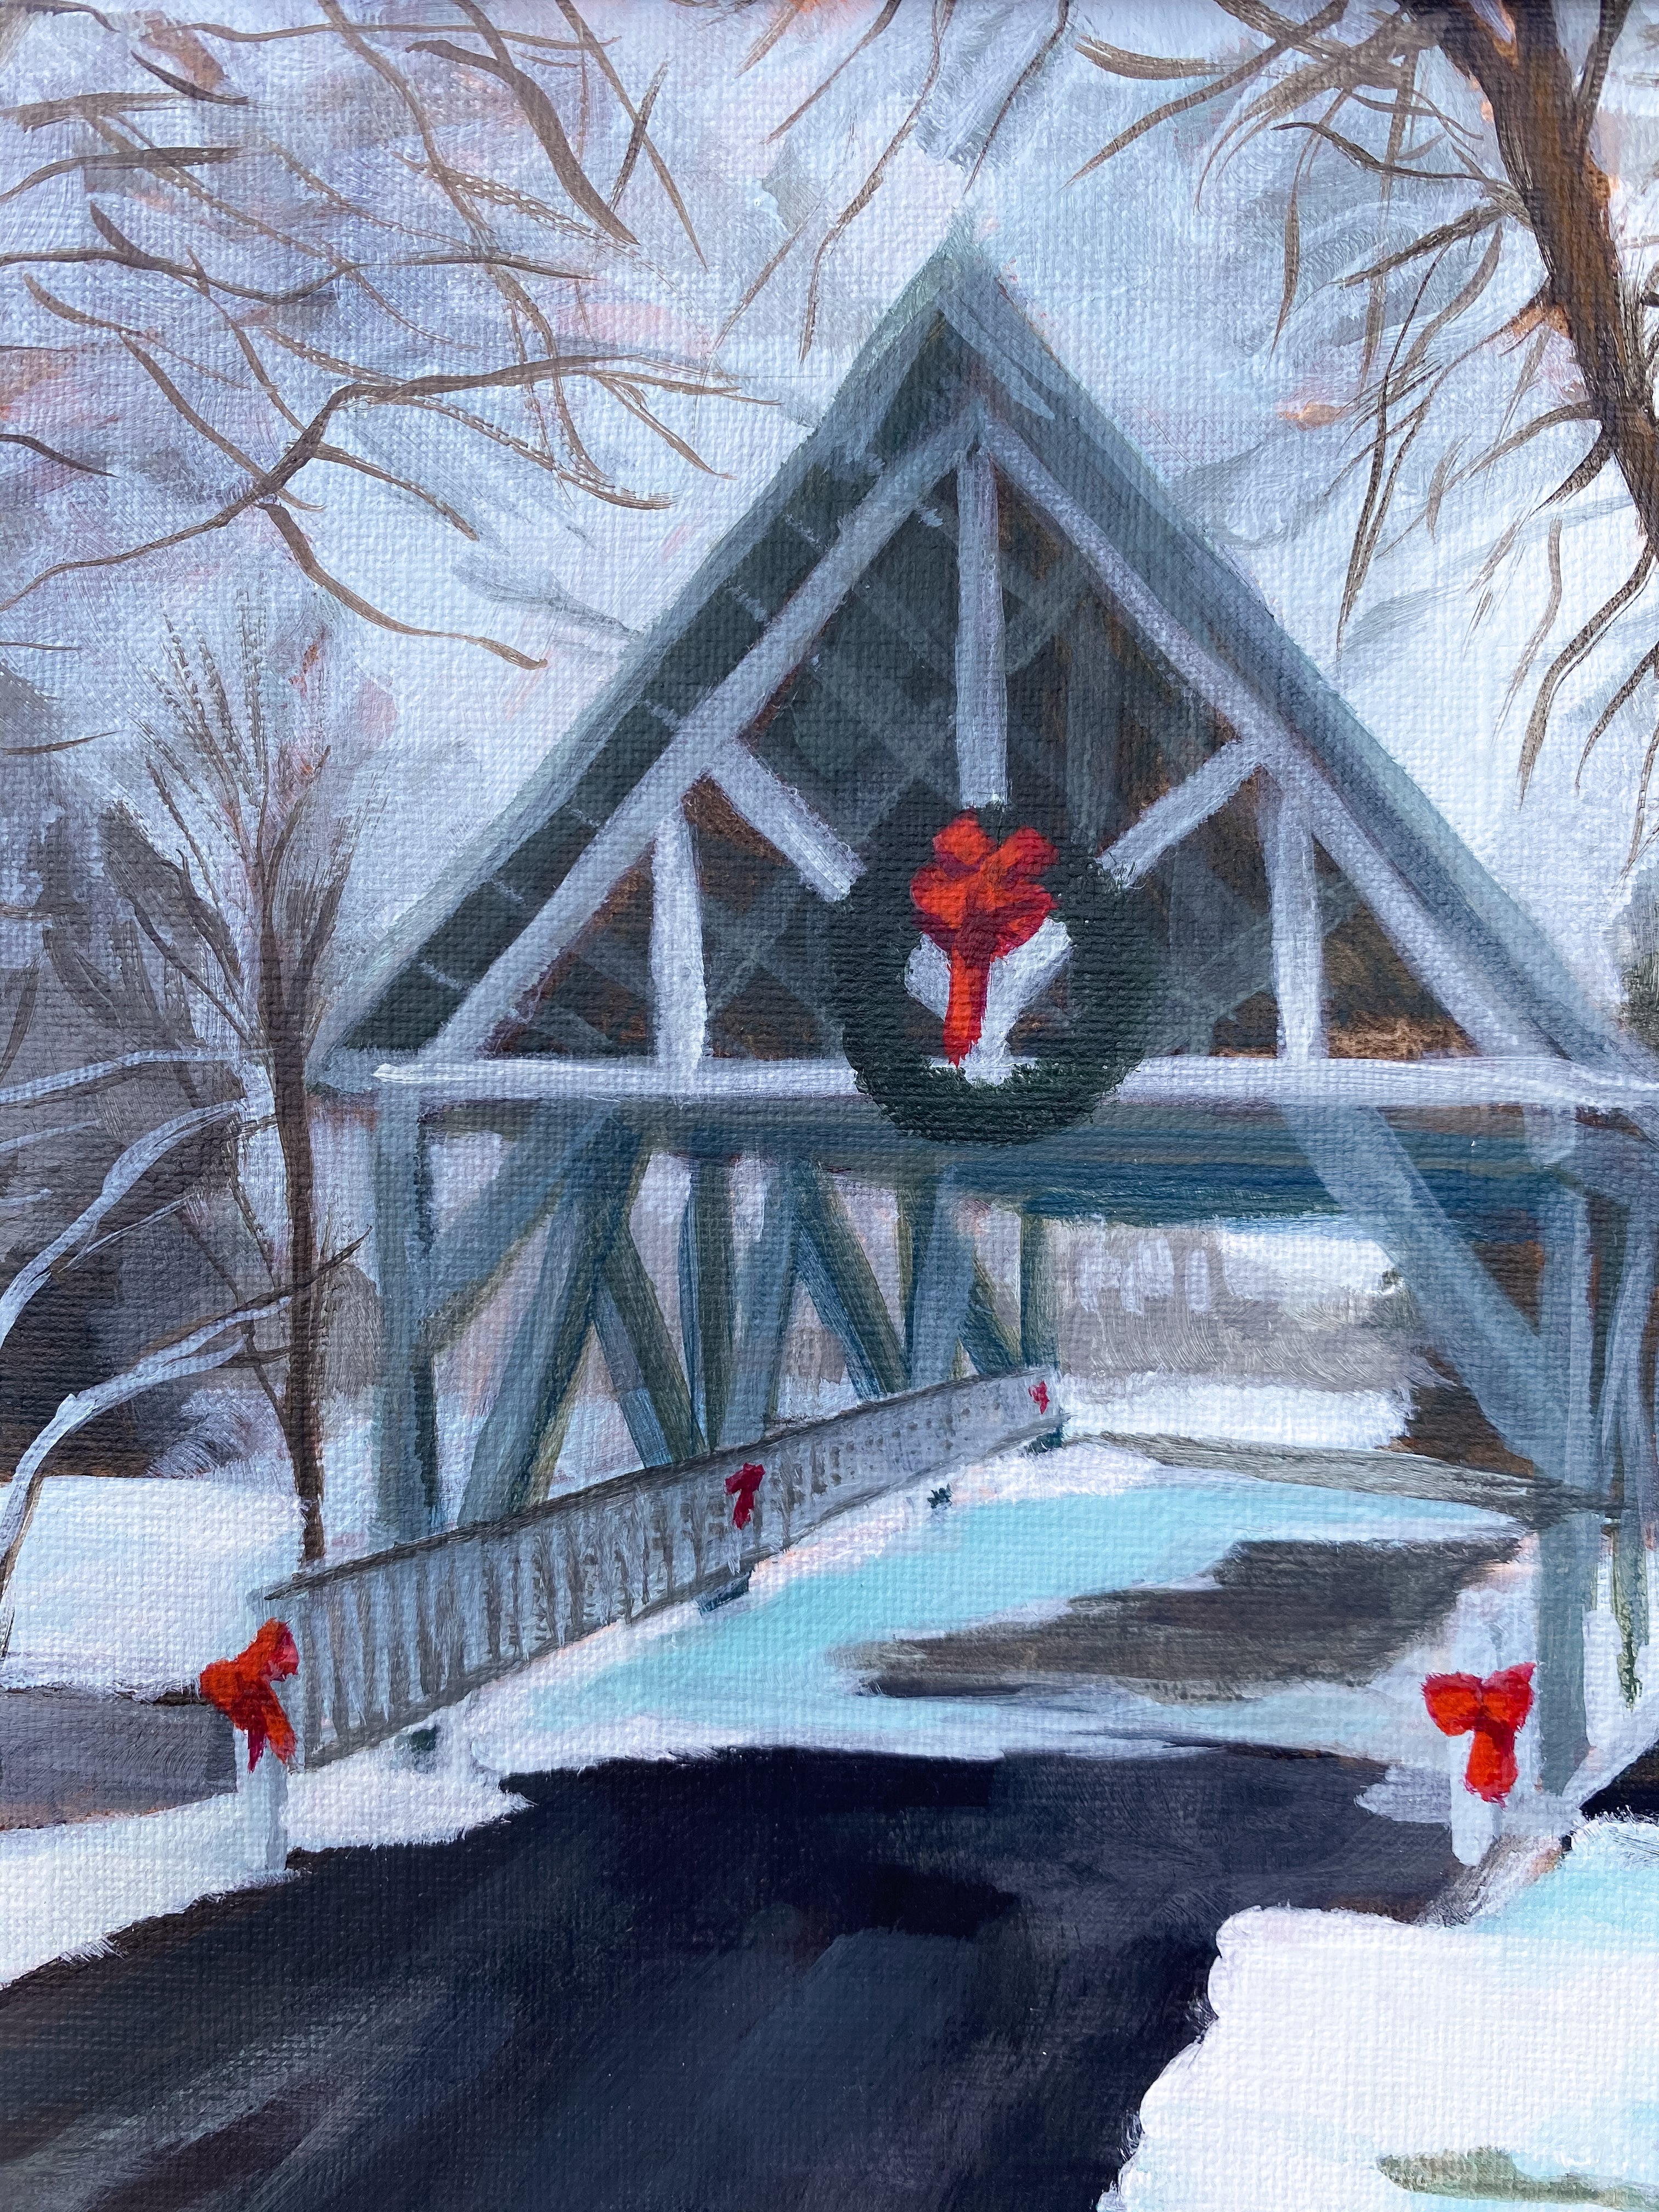 Homestead Park Winter Bridge - Original Painting - Matted, Not Framed